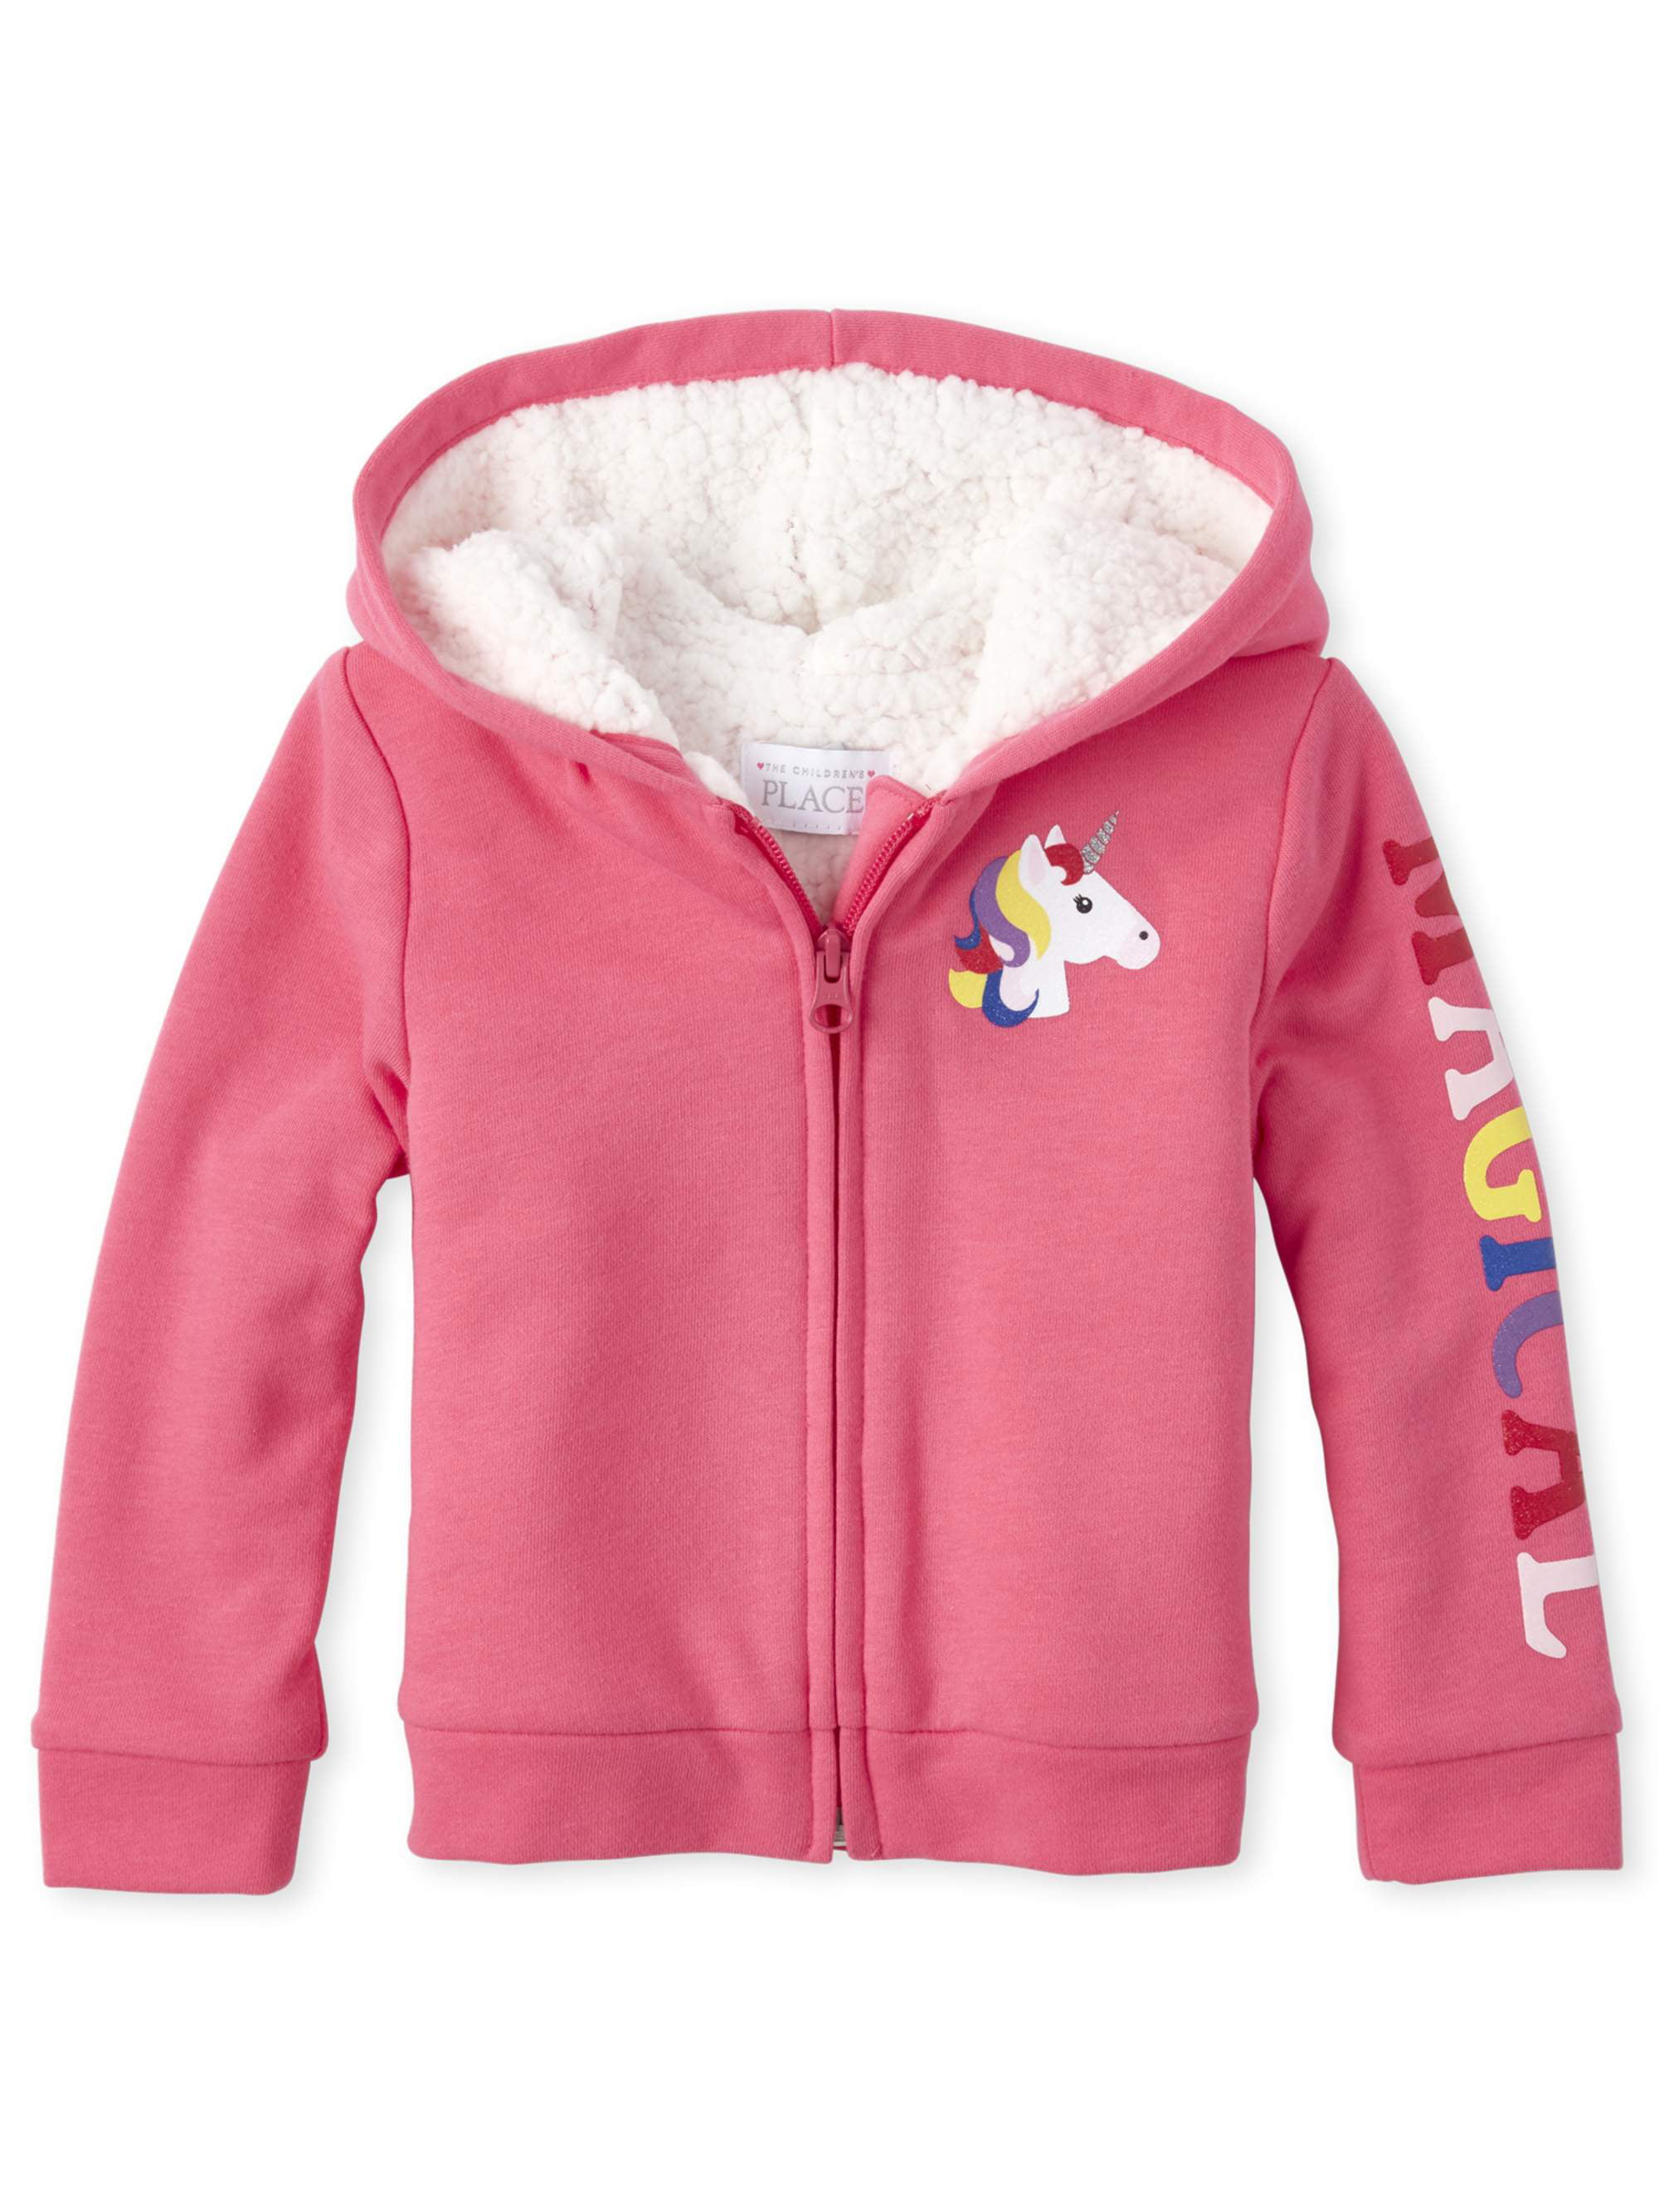 Unicorn Sweatshirts for Girls Toddler & Kids II Little Girl's Pullover Tops Sweaters & Hoodies